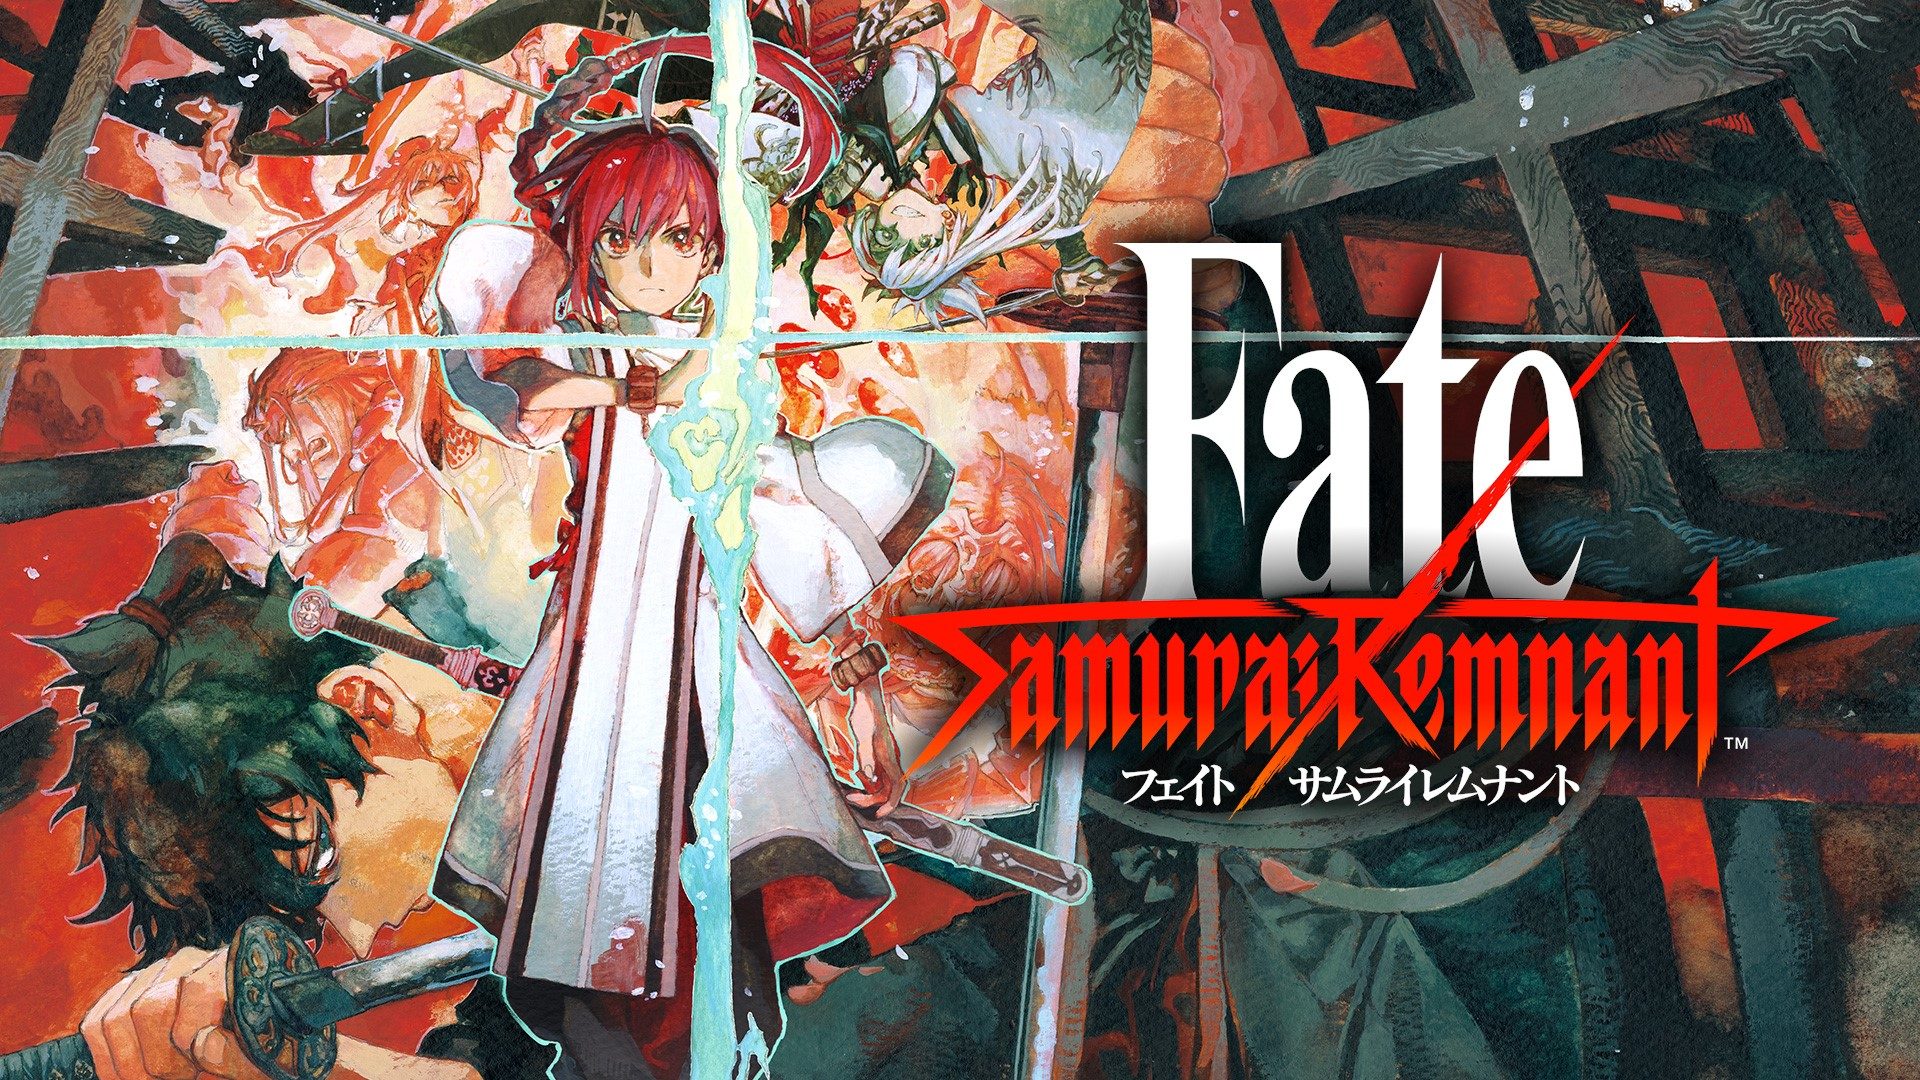 PS5®/PS4®『Fate/Samurai Remnant』の新情報が盛りだくさんの3rd 